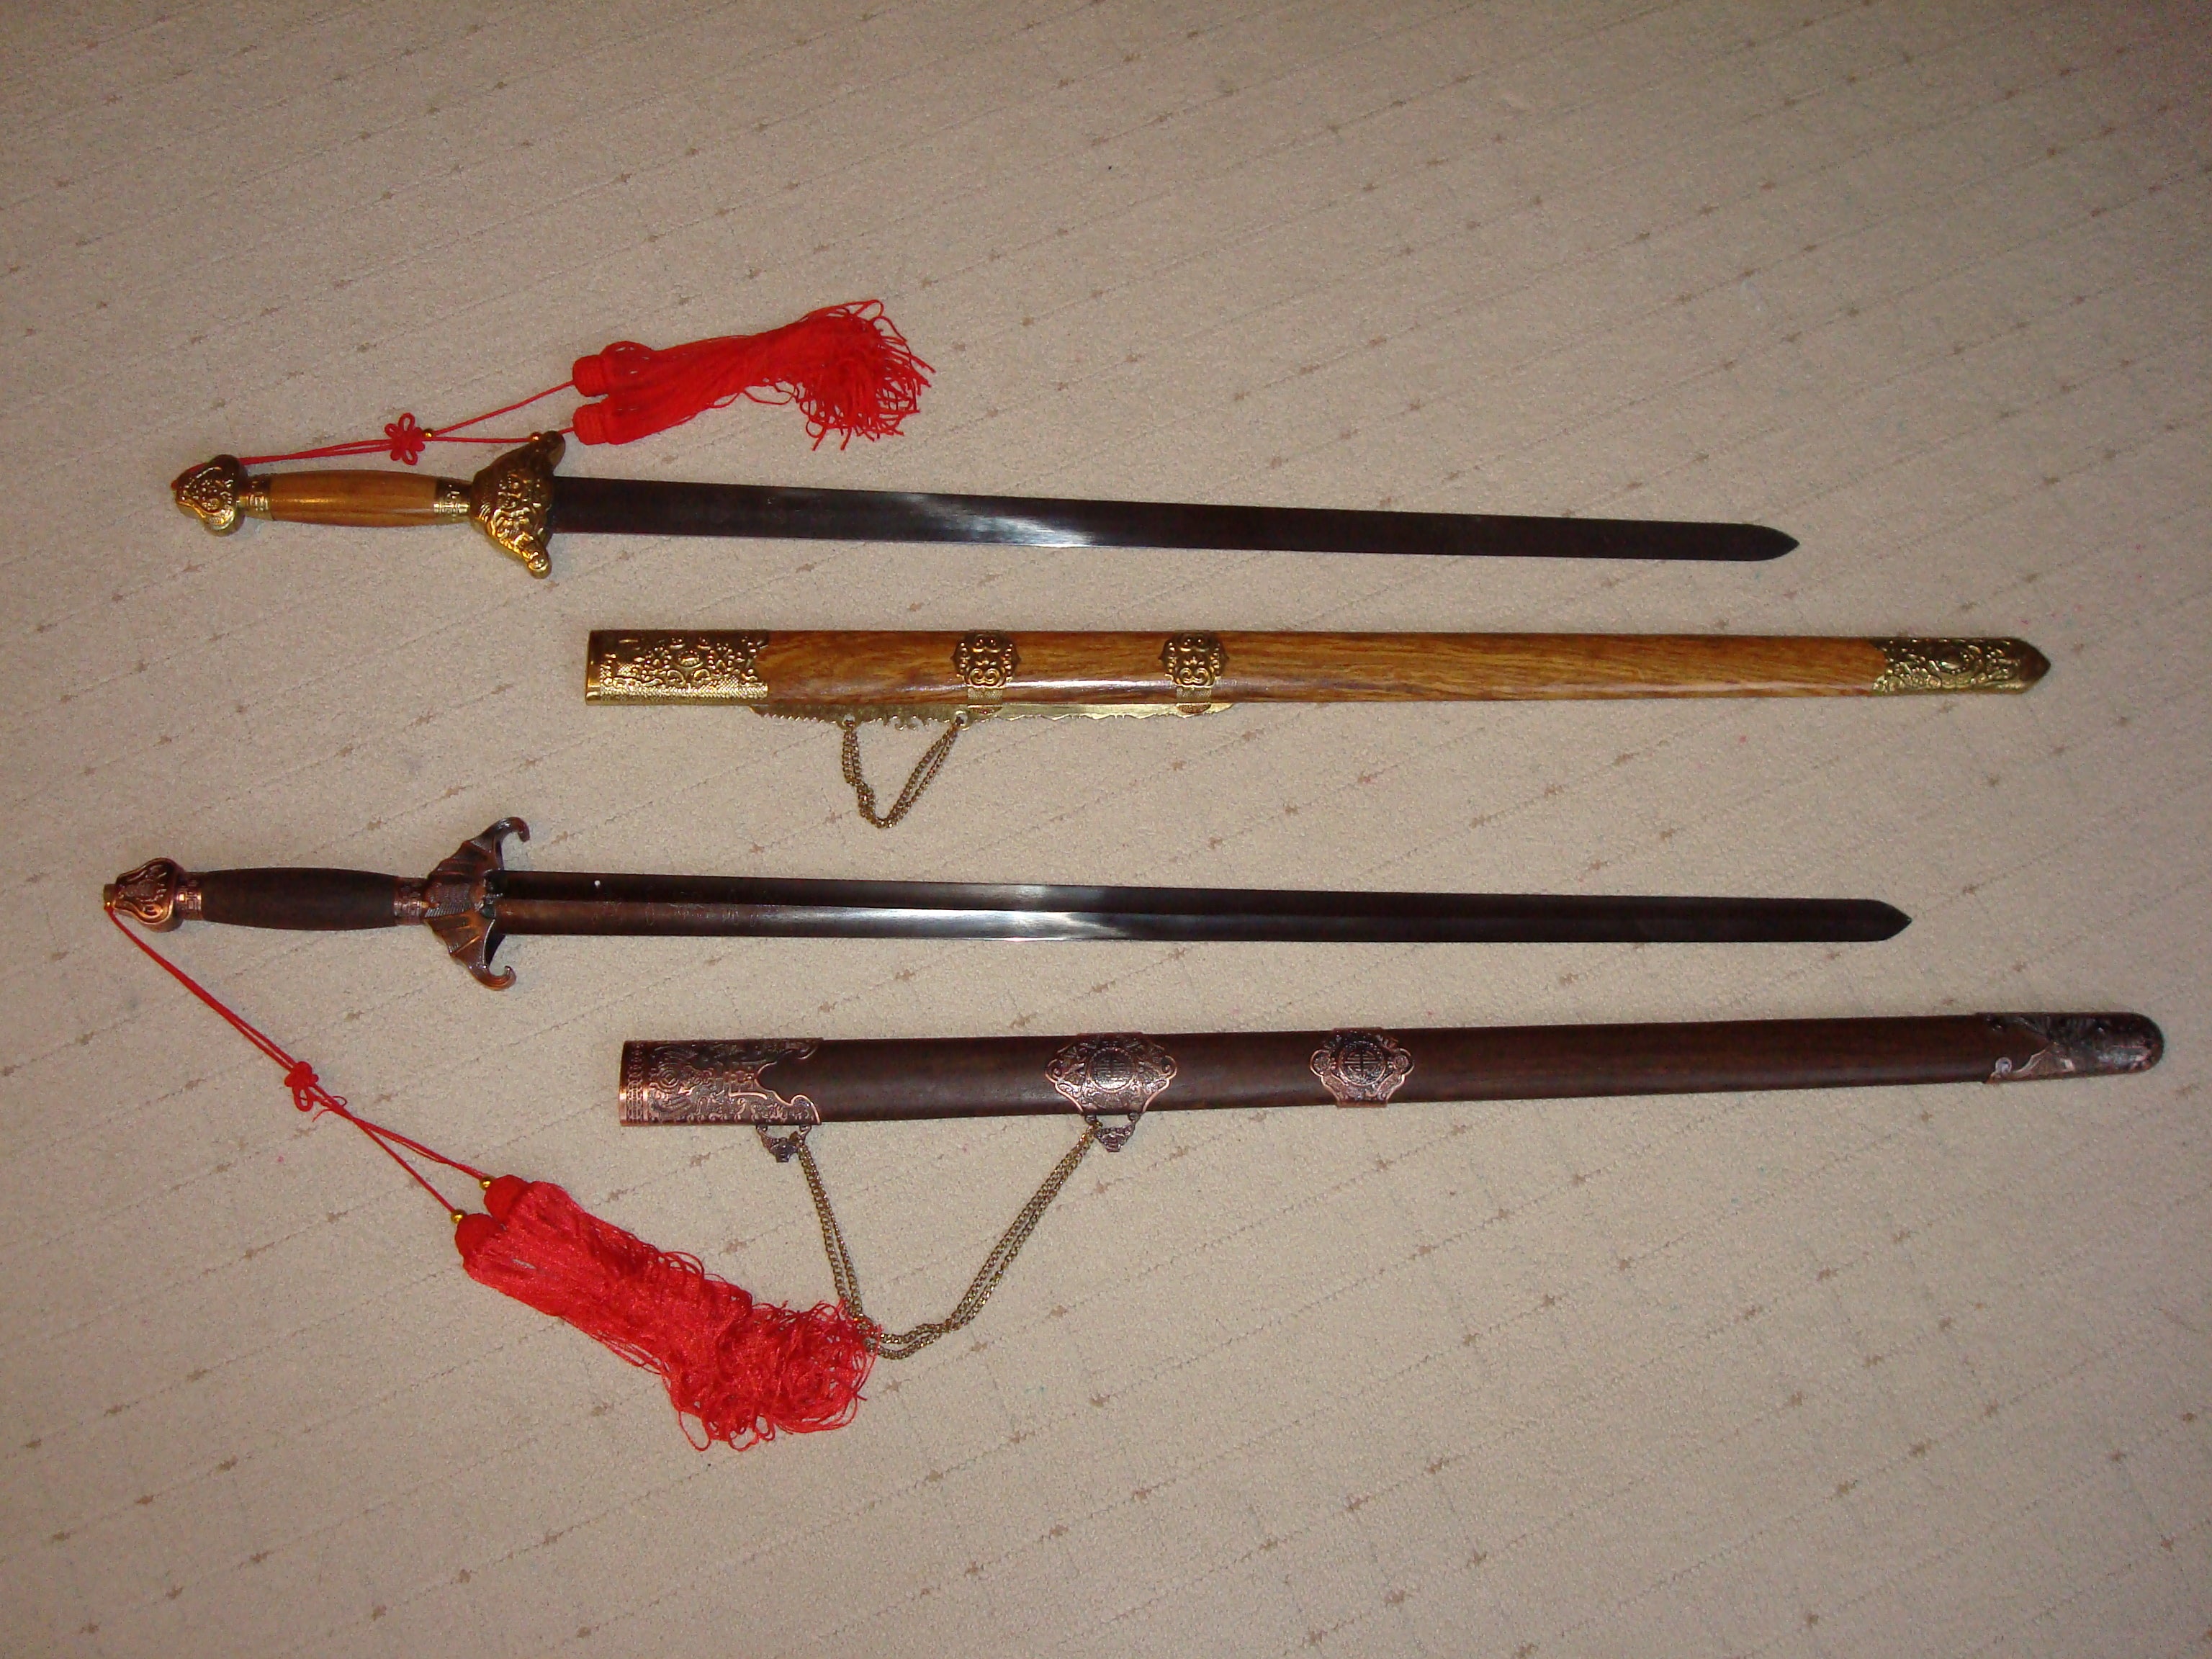 Sword Spotlight: The Taijijian